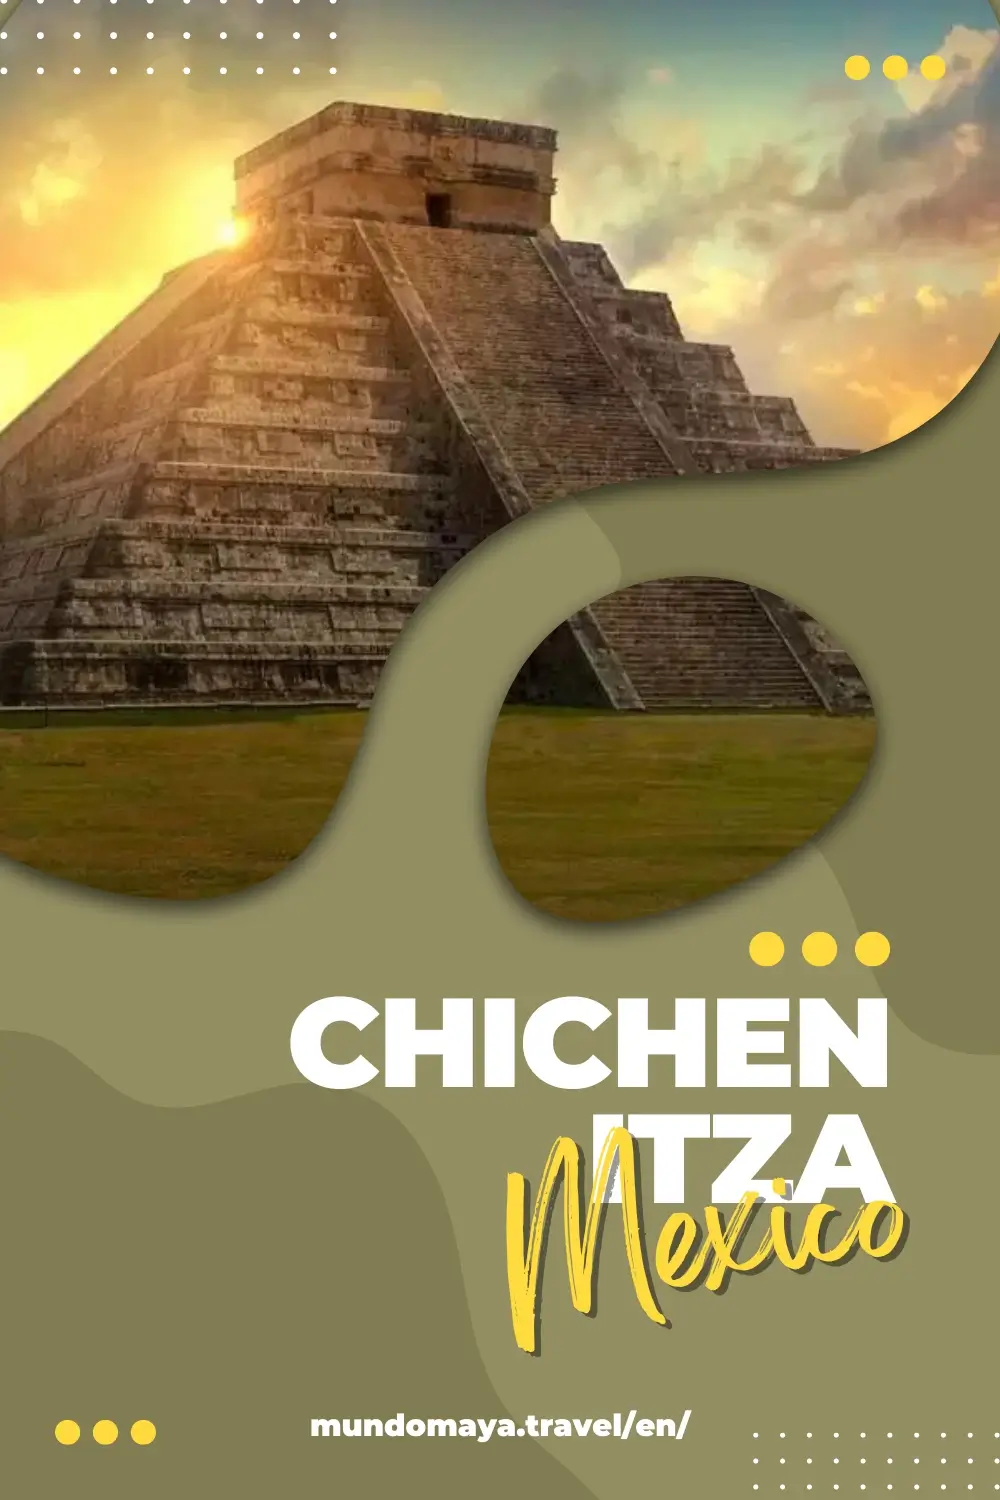 Chichen Itza: The Ancient Mayan City of Wonders